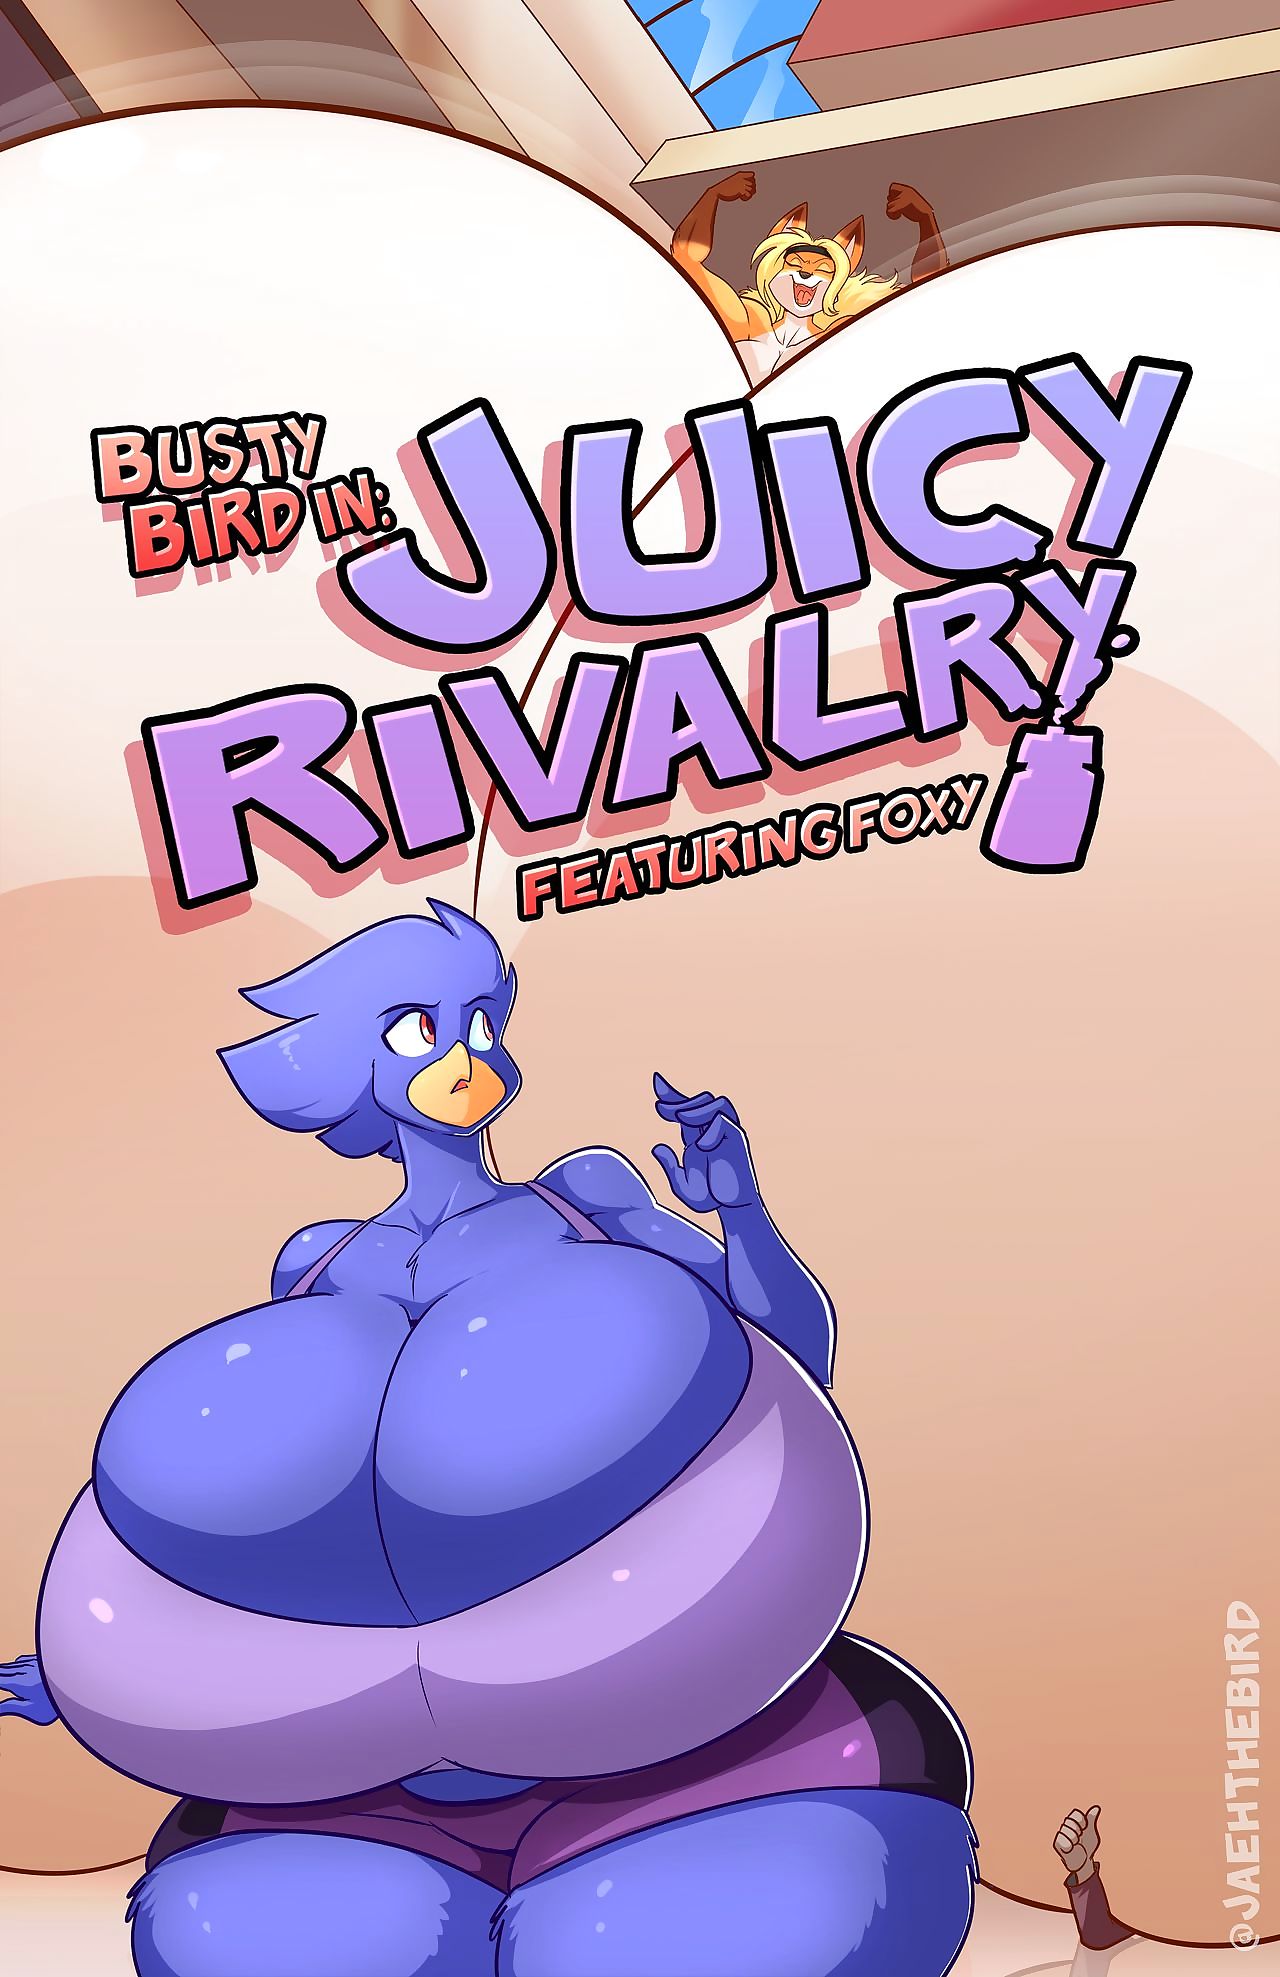 JaehTheBird- Juicy Rivalry page 1